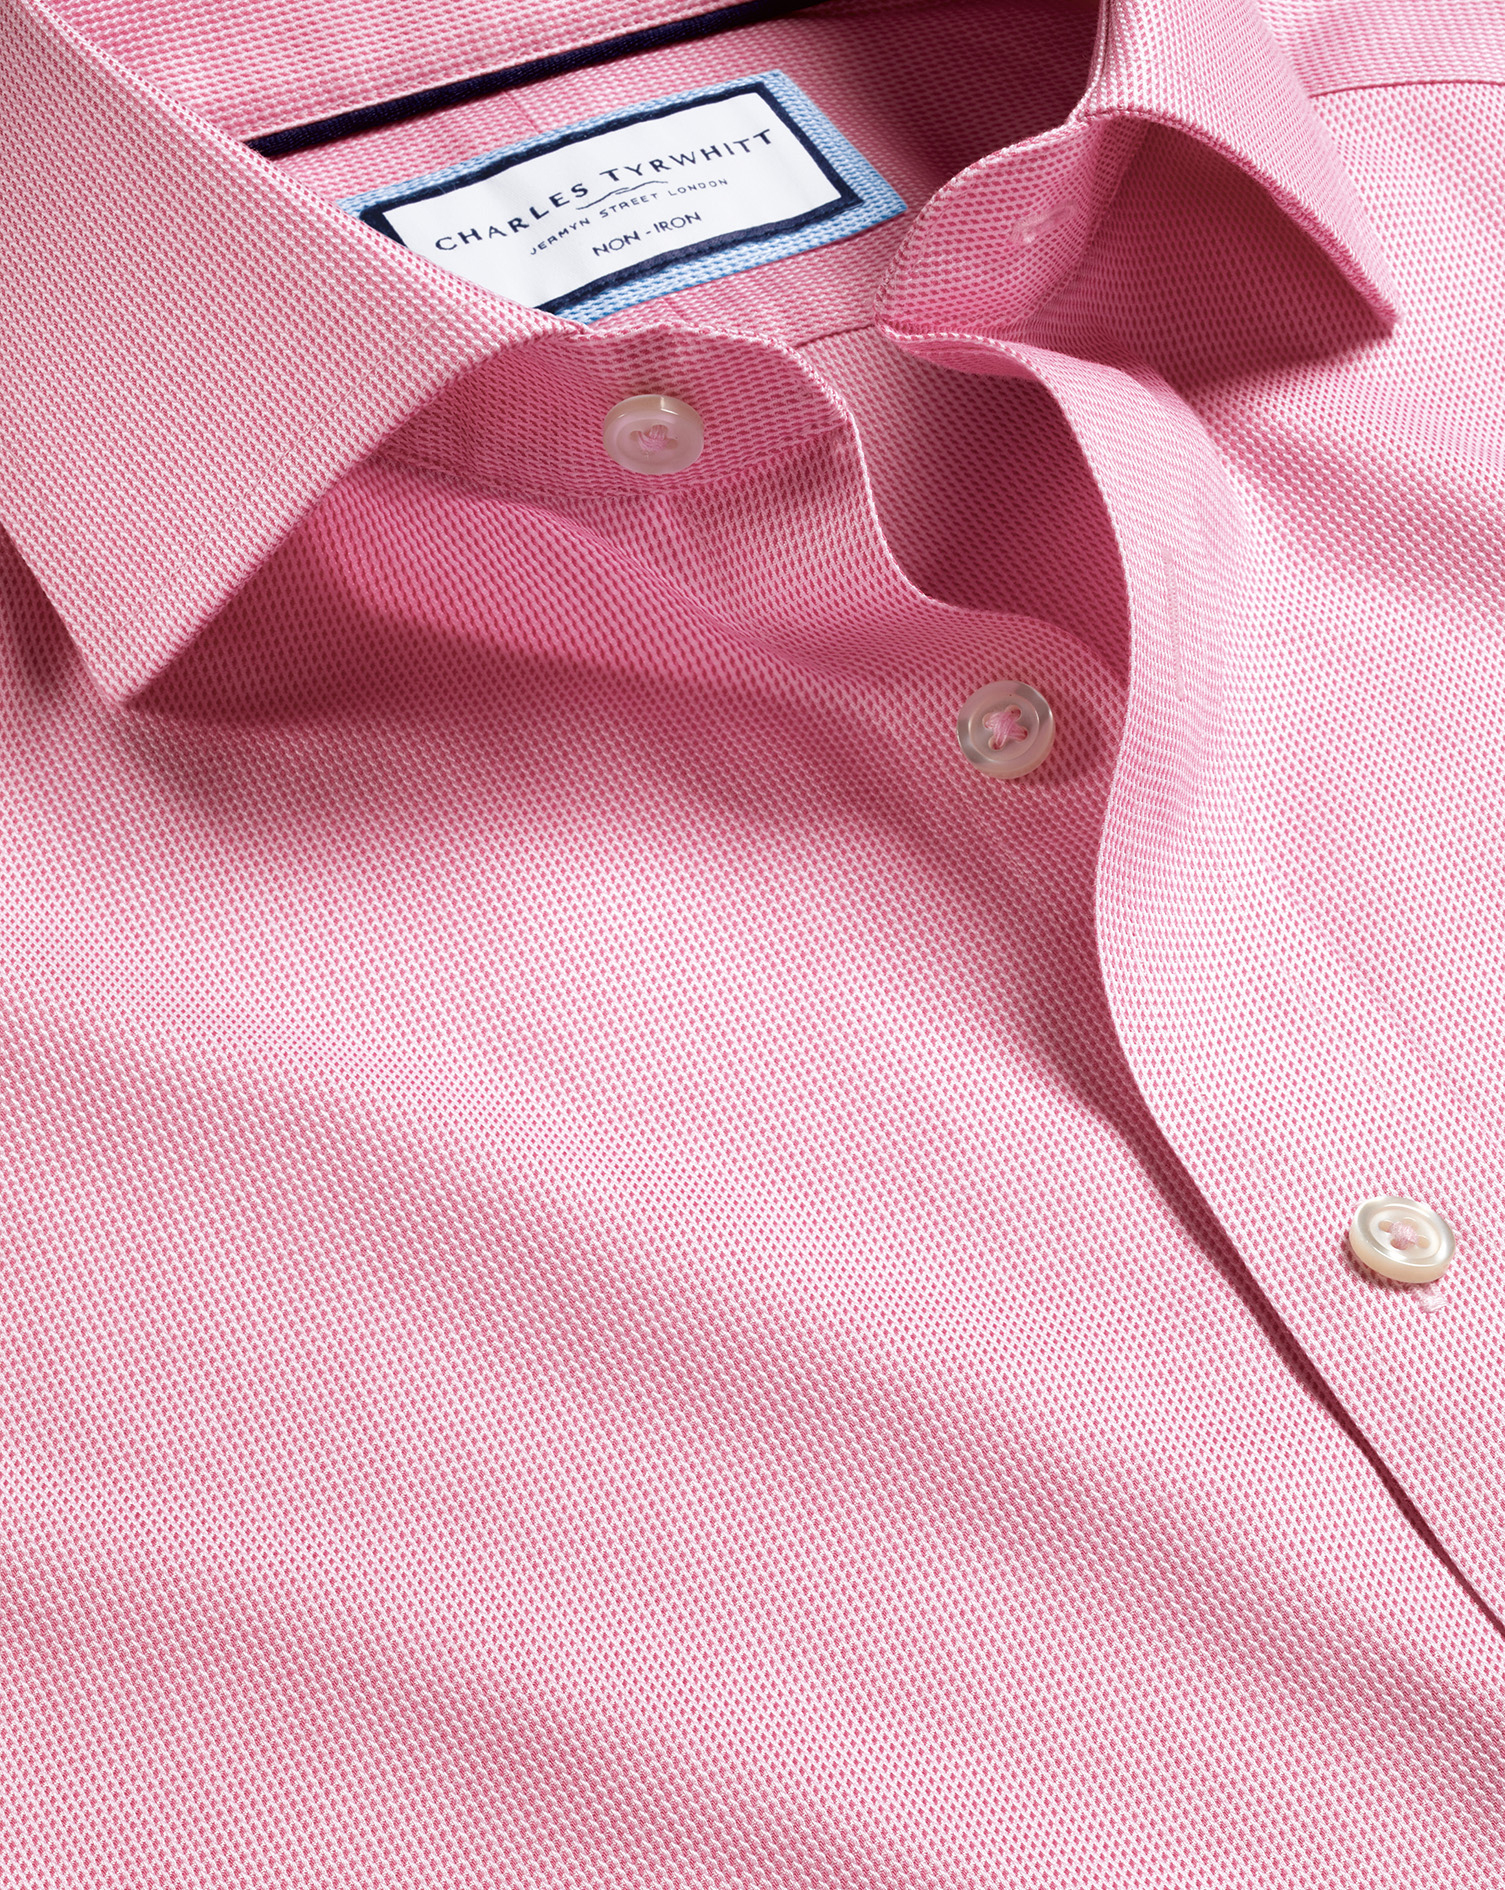 Men's Charles Tyrwhitt Cutaway Collar Non-Iron Clifton Weave Dress Shirt - Pink French Cuff Size 15/